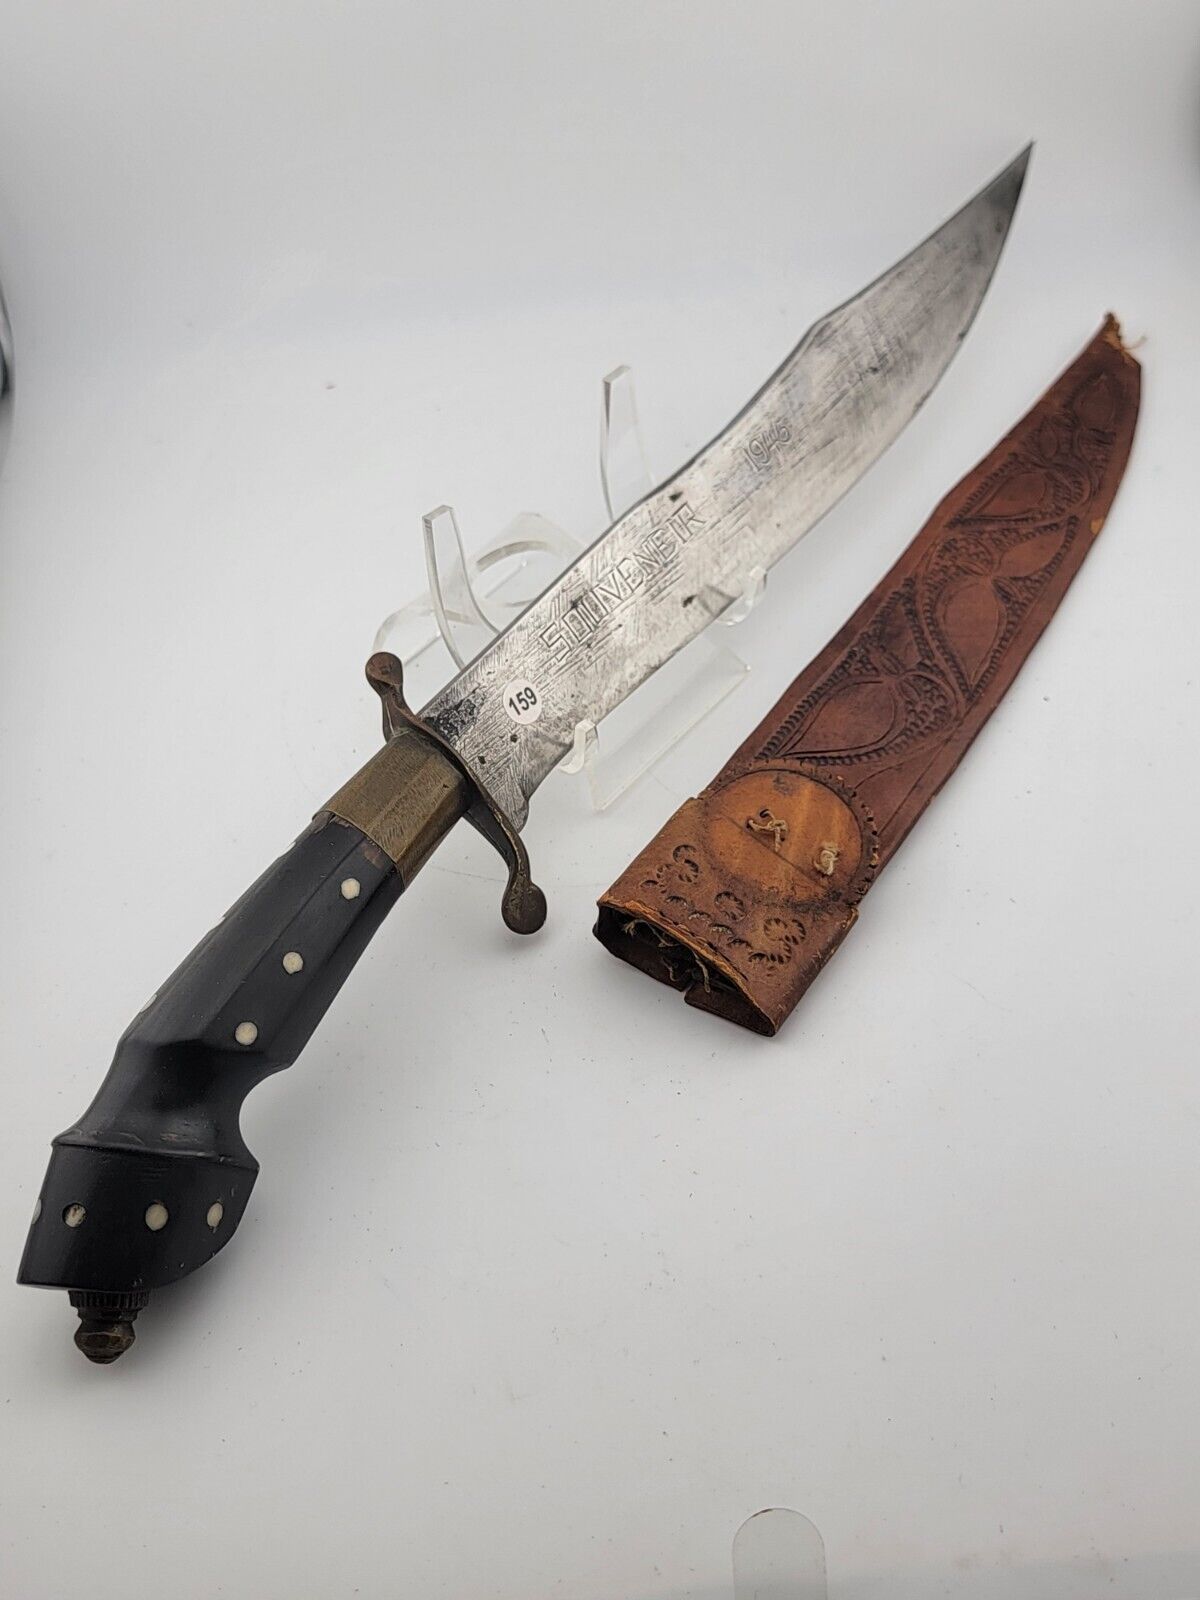 Massive WW2 Knife / Dagger  (11 inch Blade) Dated 1945, Souvenir Soldier Knife